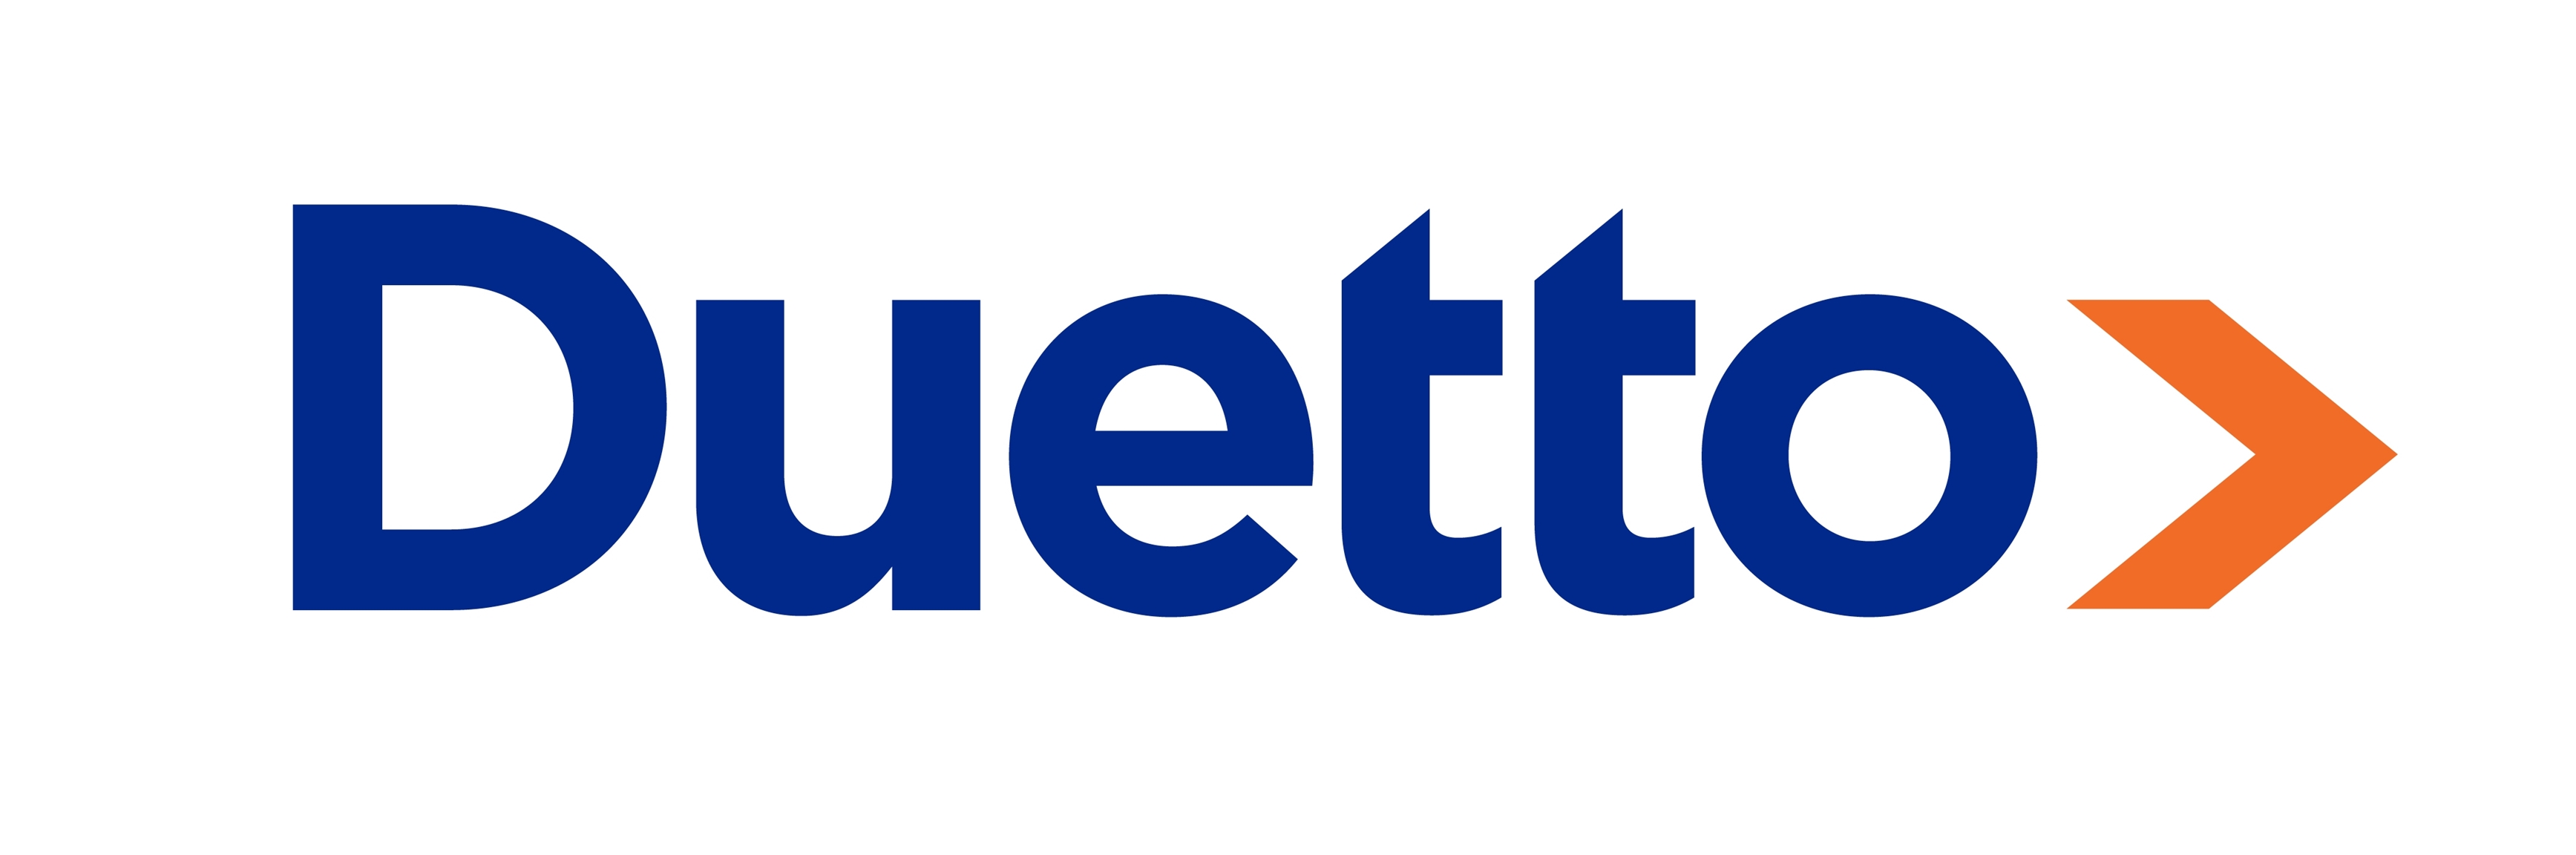 Duetto Research logo